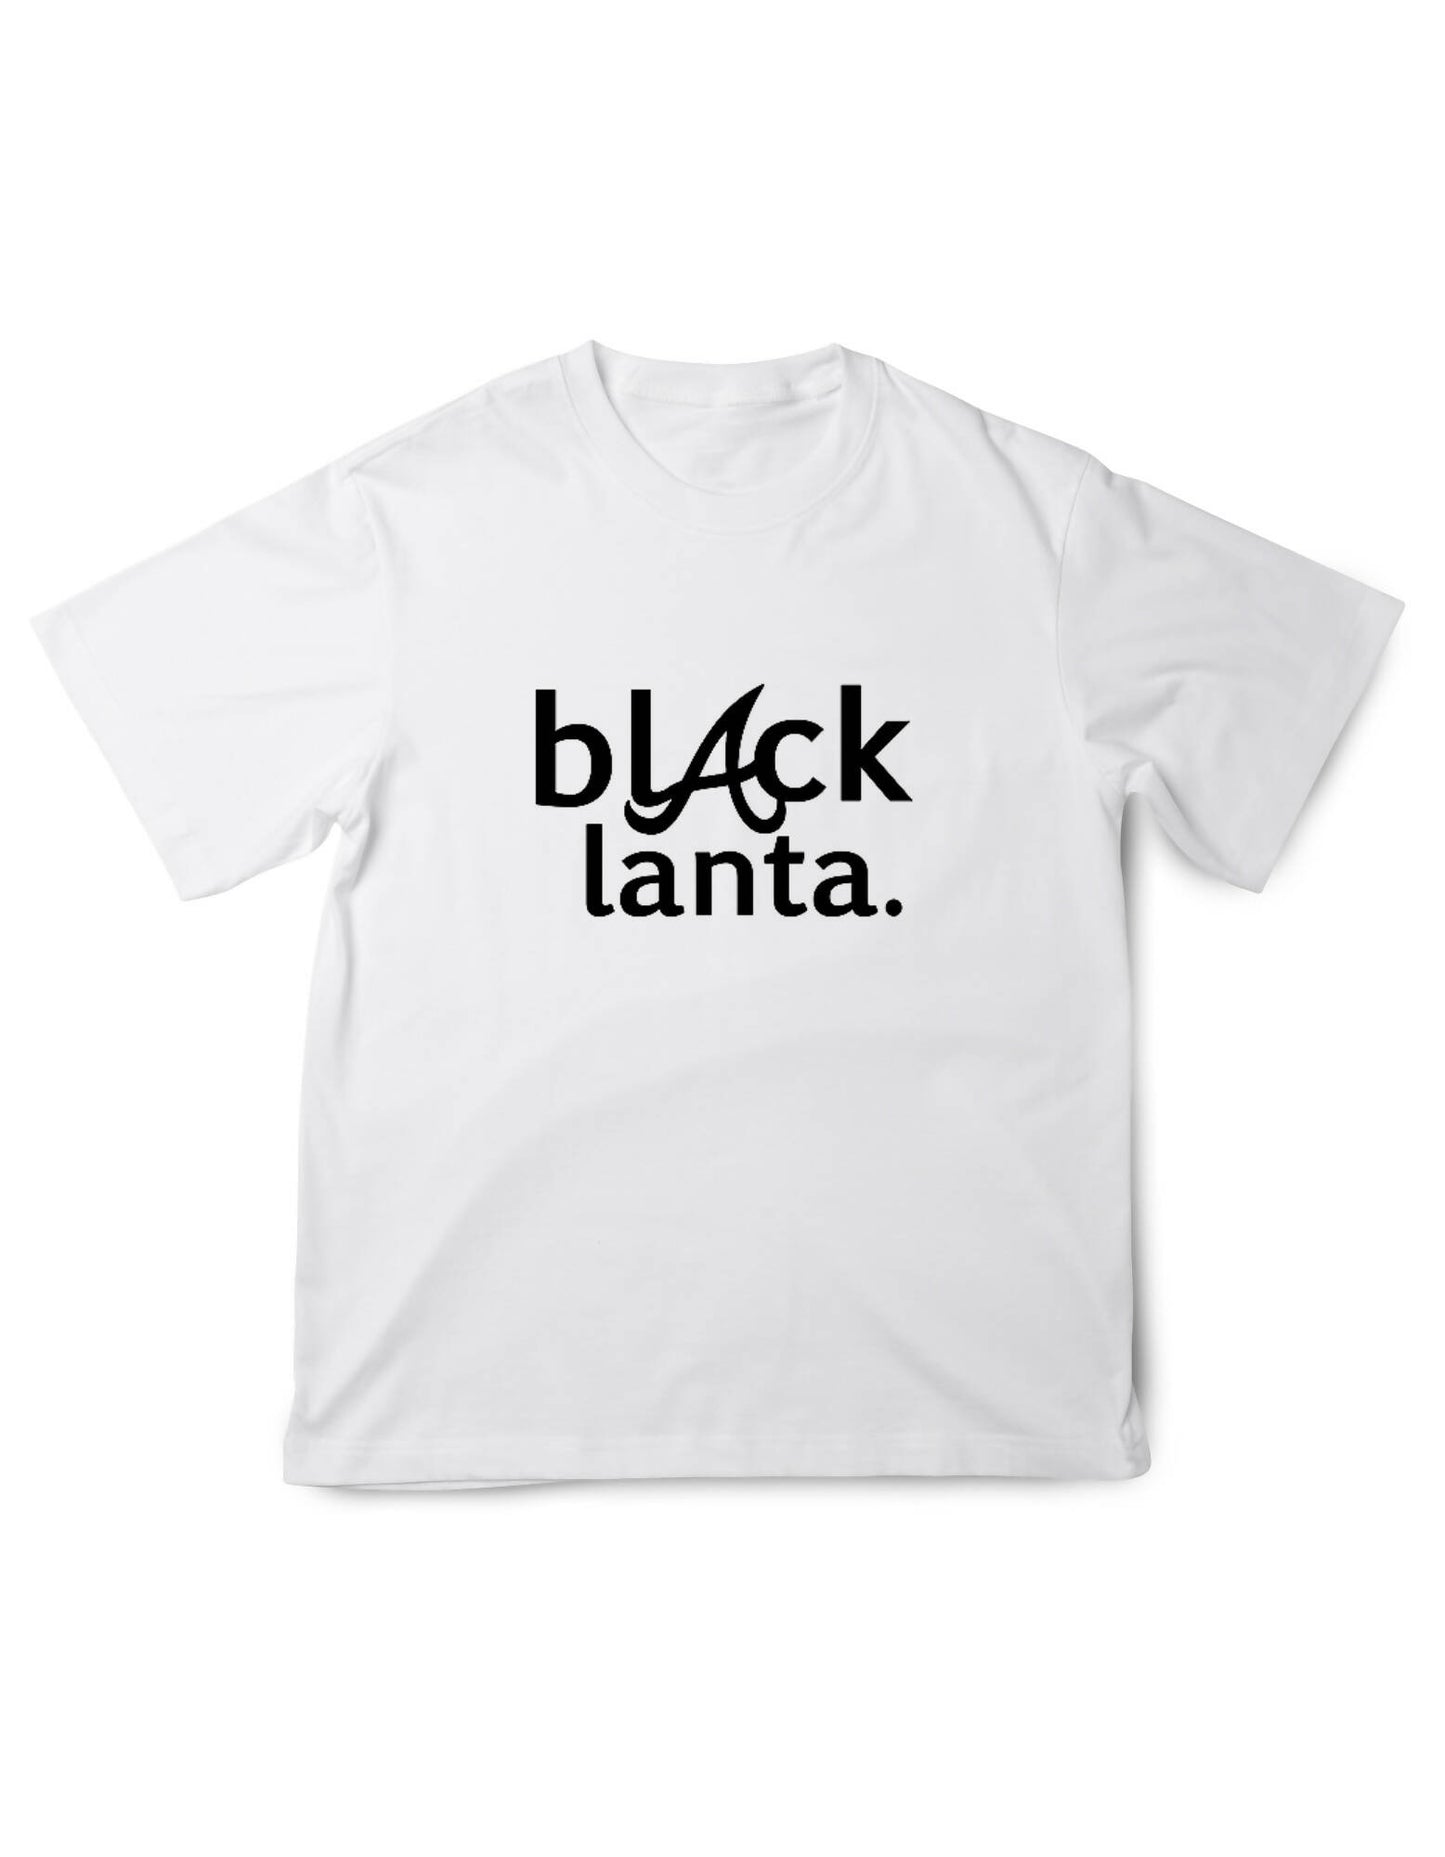 Blacklanta OG Tee